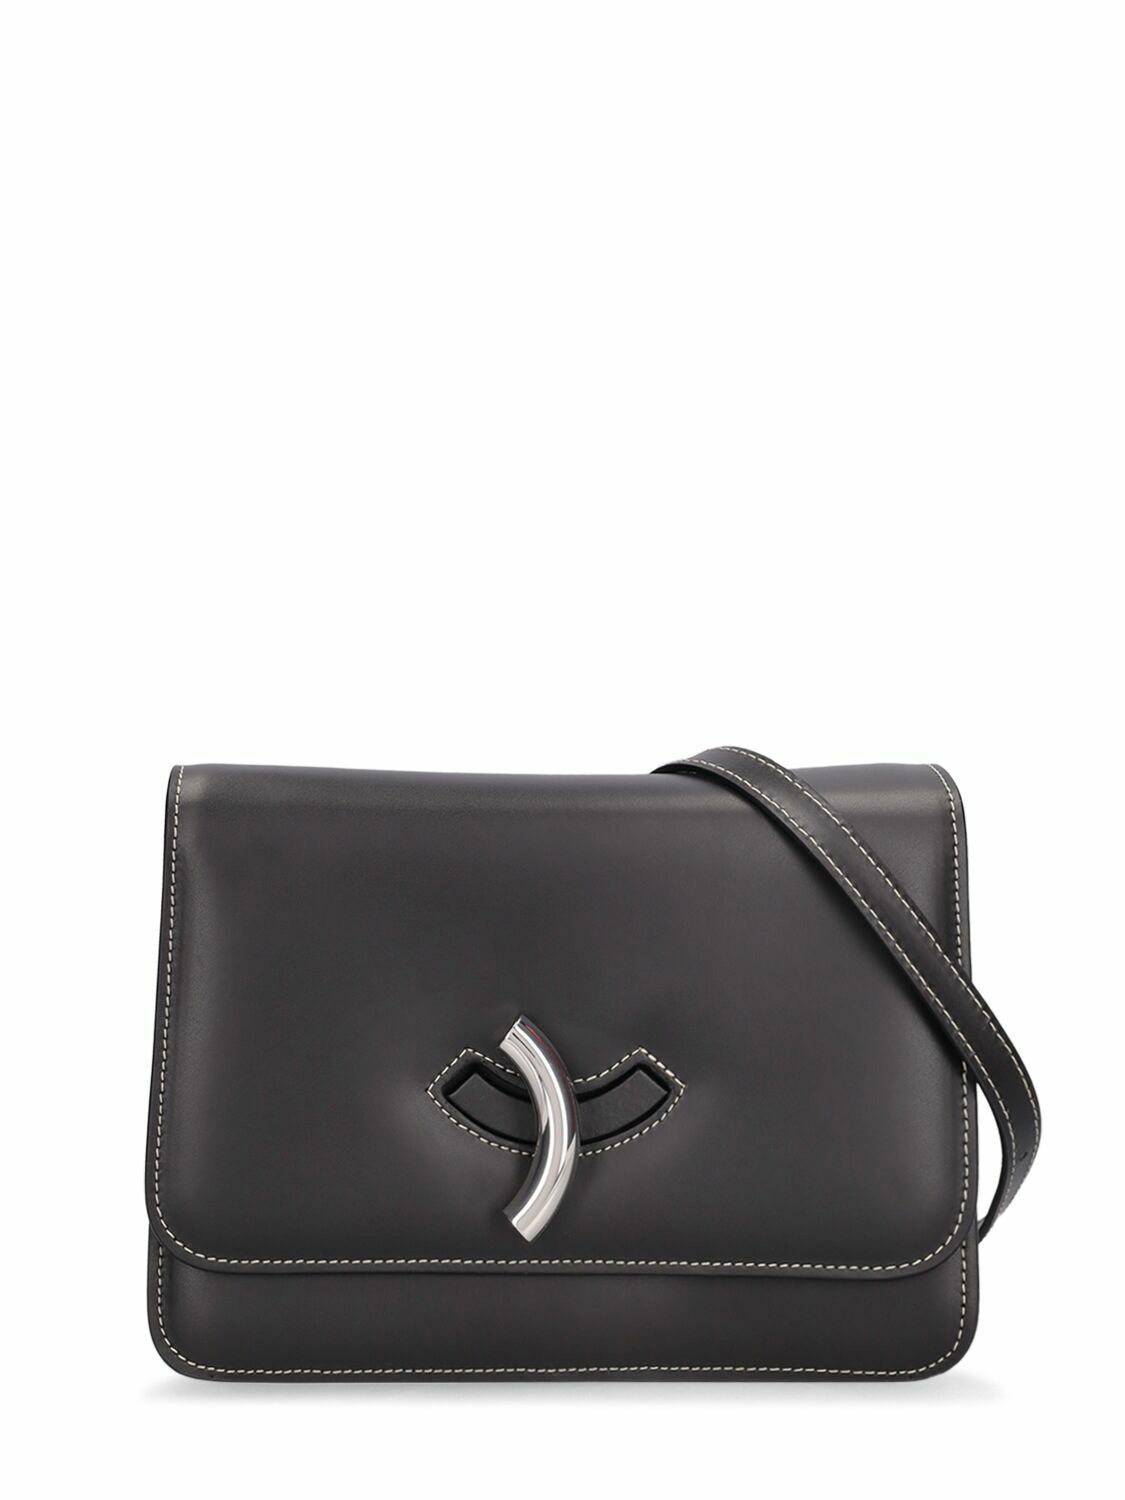 Photo: LITTLE LIFFNER - Maccheroni Leather Shoulder Bag